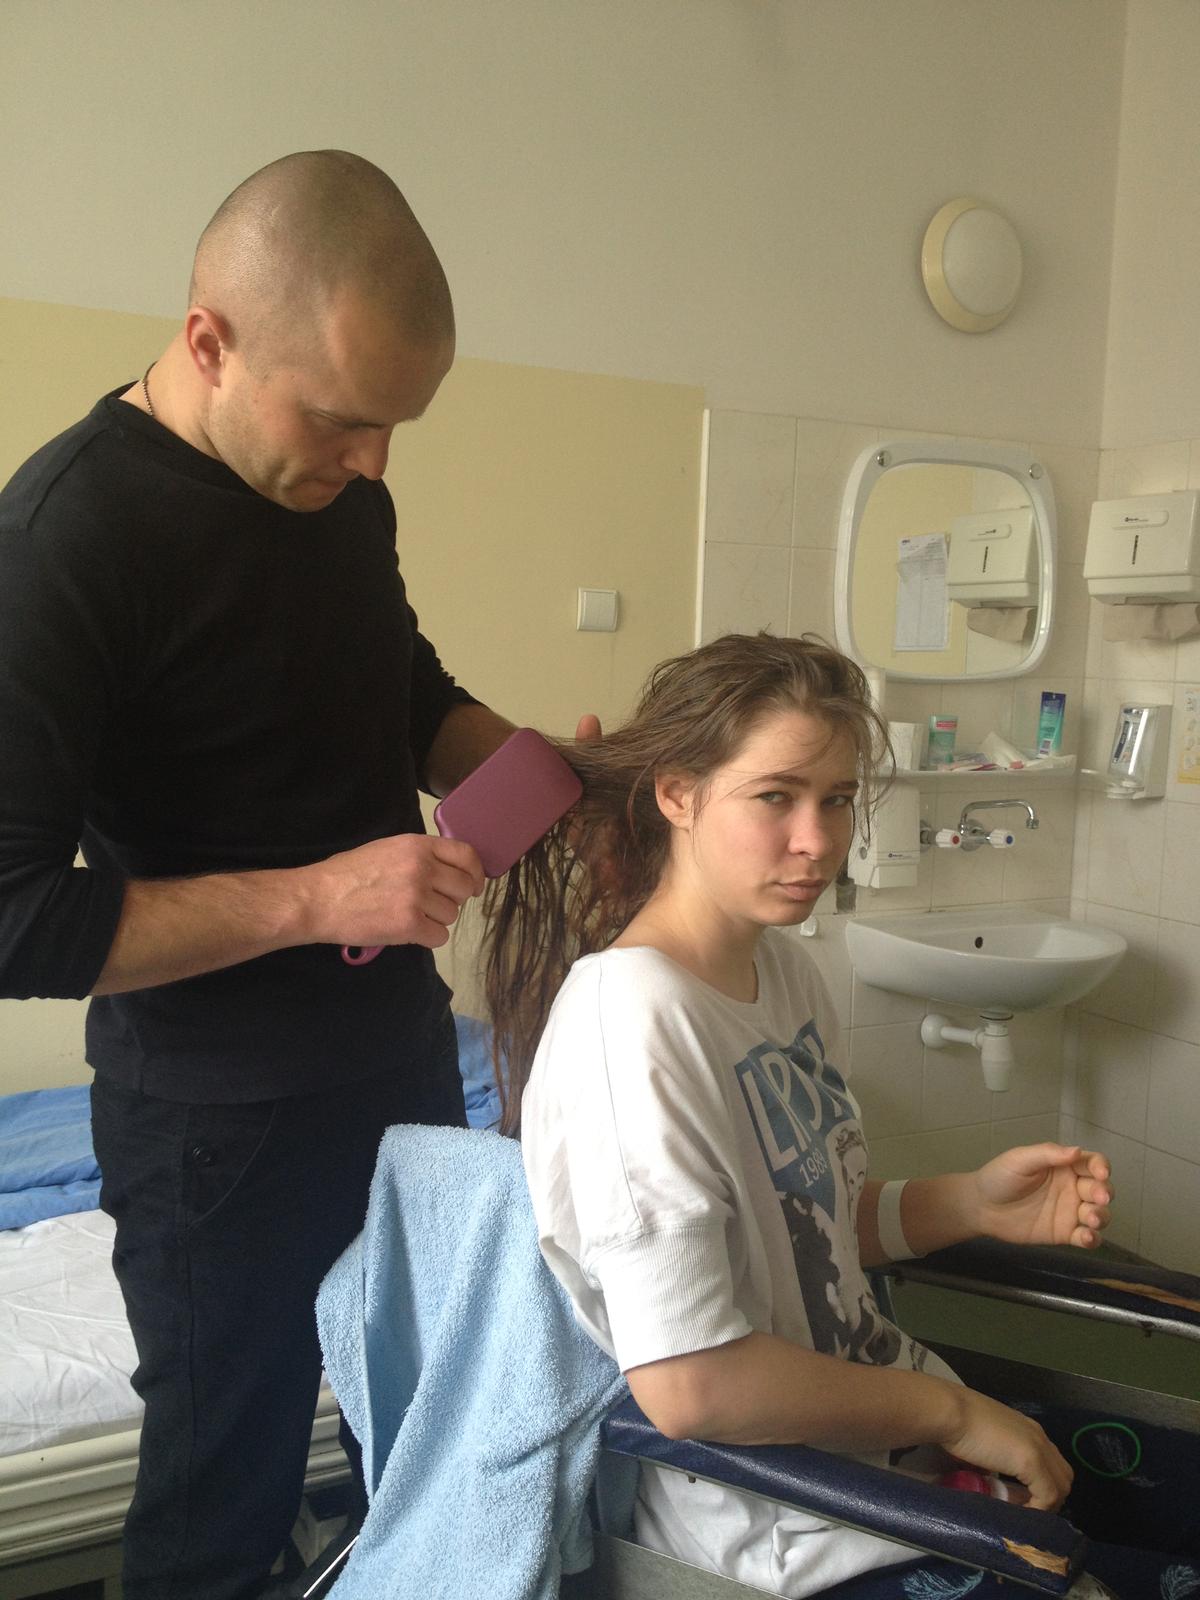 Kamil brushing Kasia's hair at a hospital in Warsaw, Poland. (Courtesy of <a href="https://www.instagram.com/equestriankasiabukowska/">Kasia Bukowska</a>)